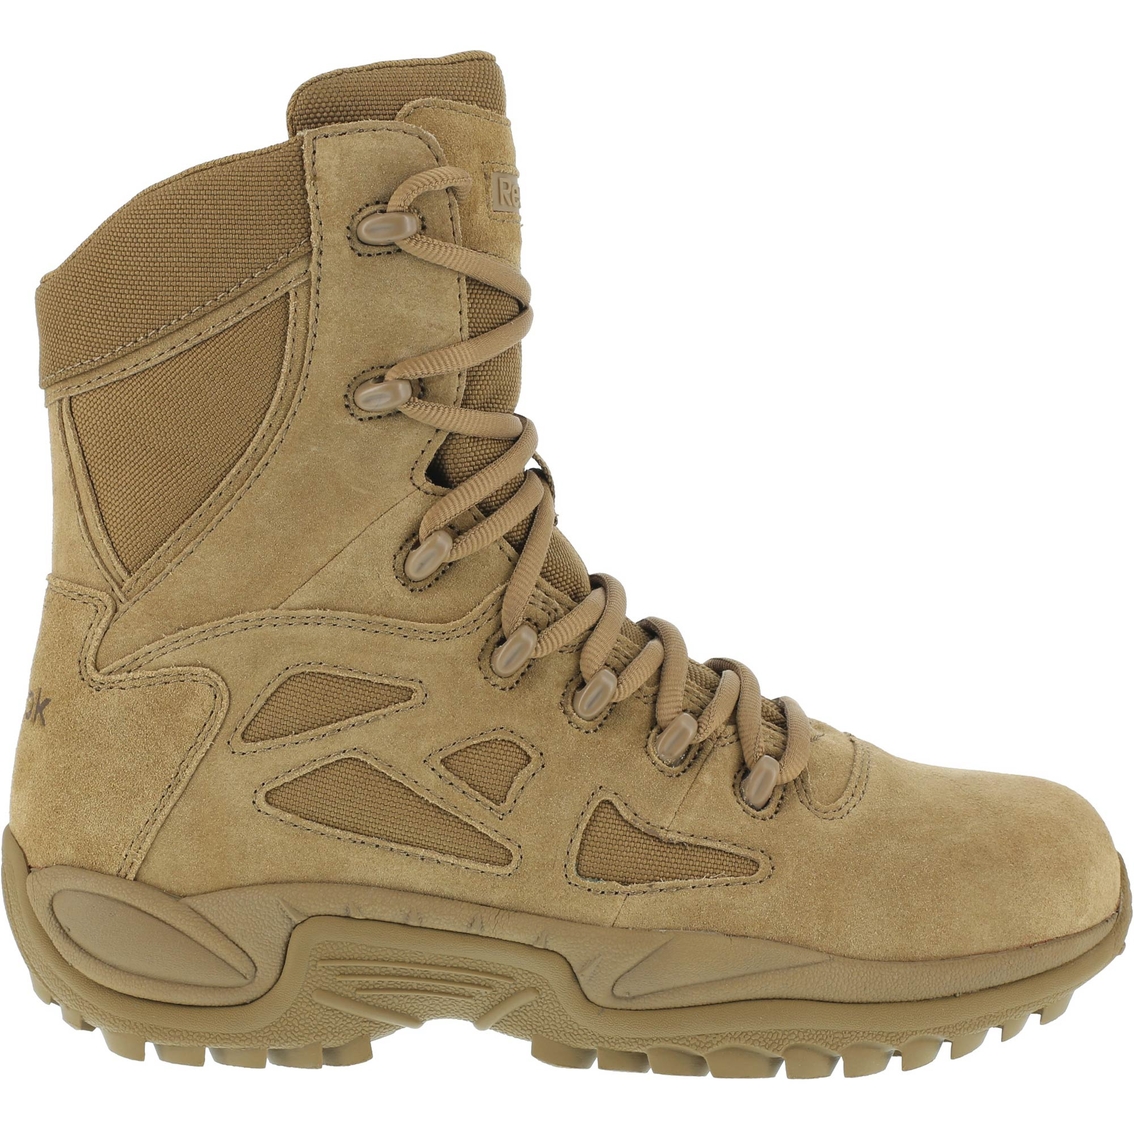 Reebok Men's Rapid Response AR670-1 Compliant Boots - Image 3 of 4